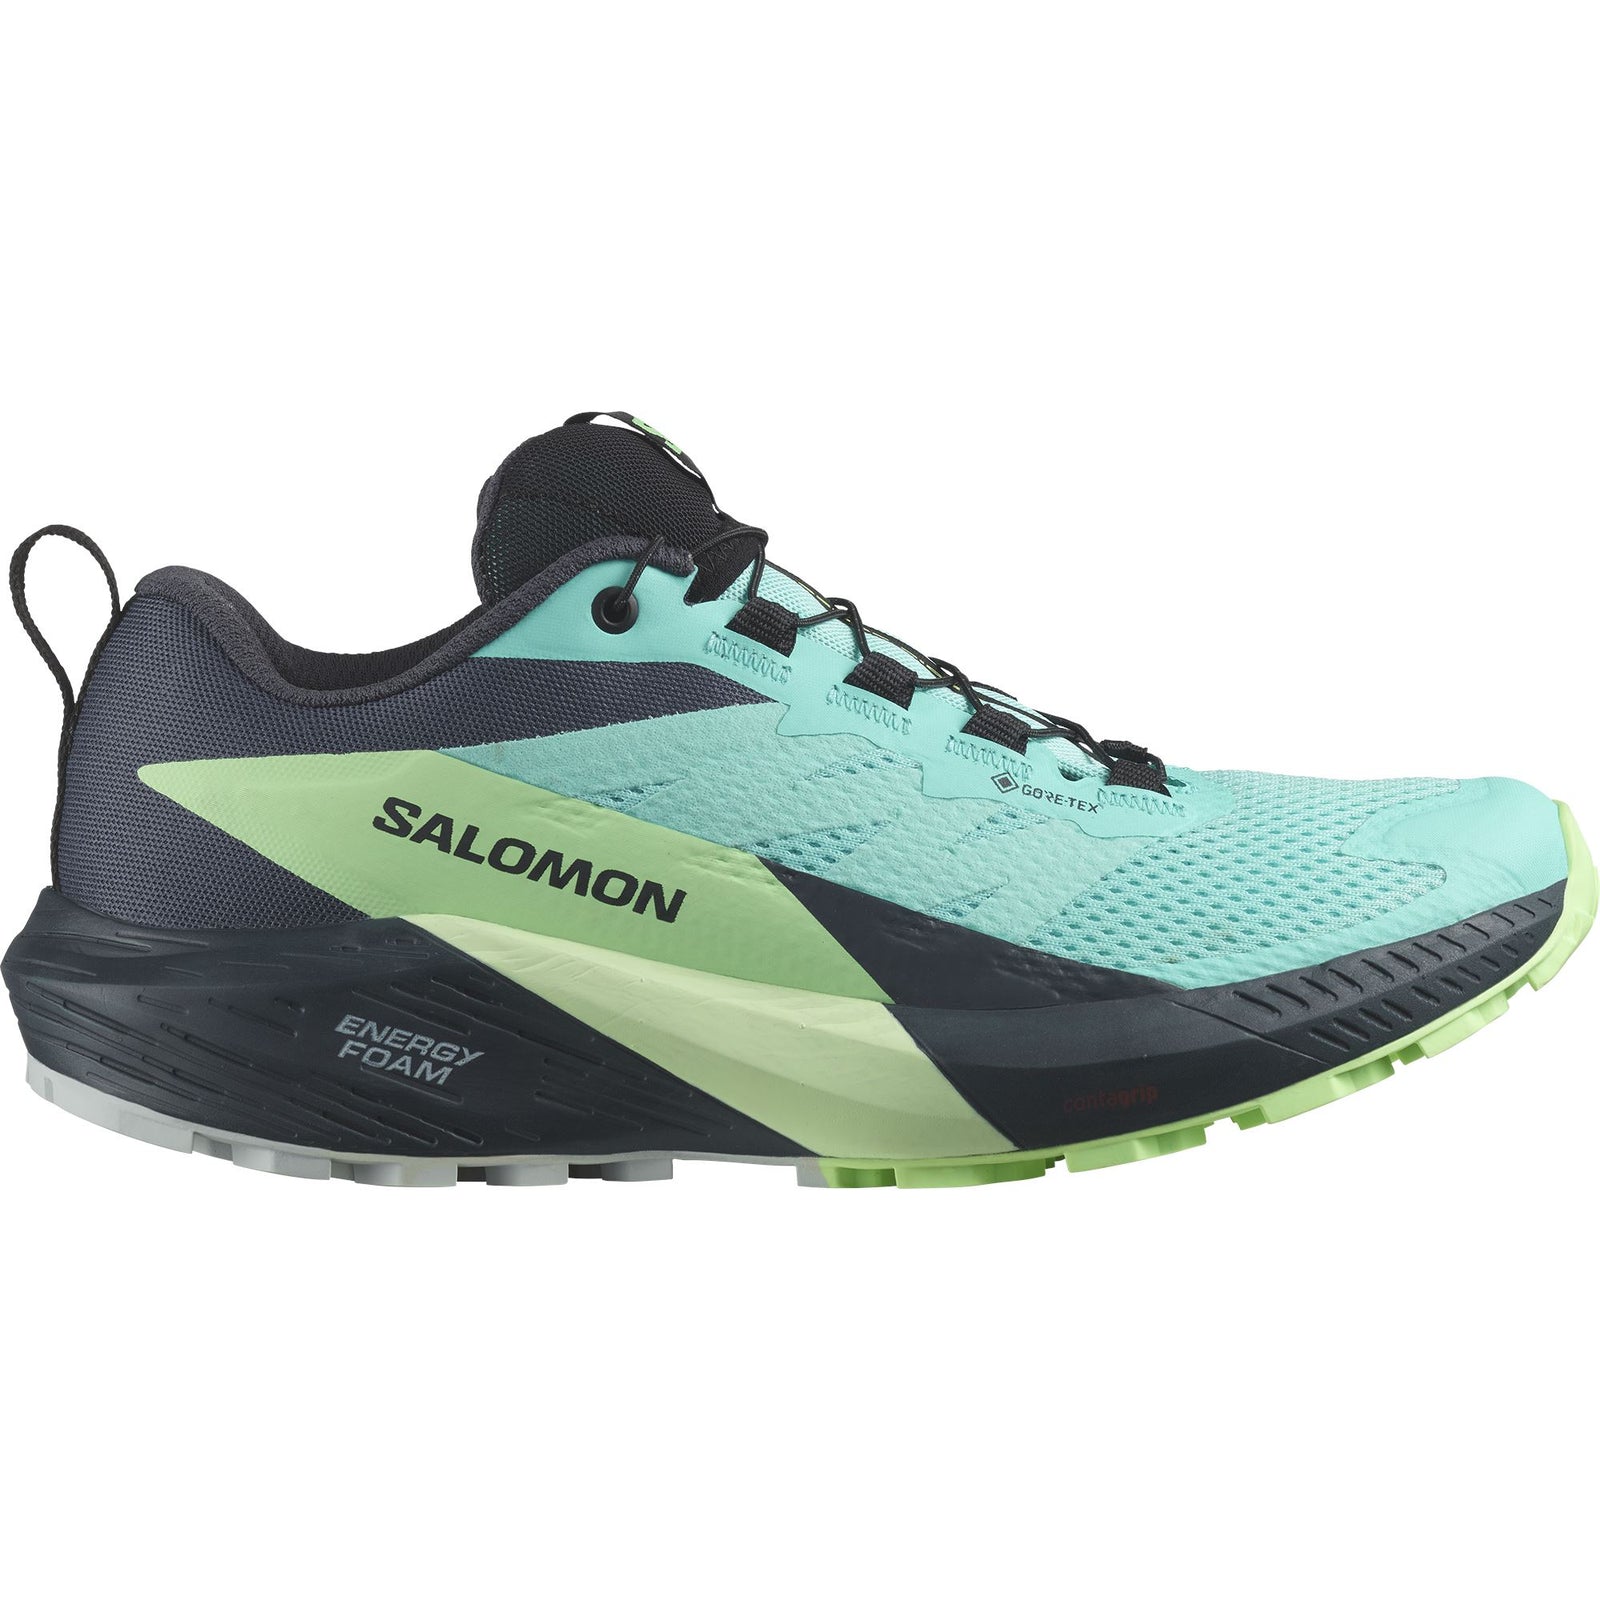 Salomon Sense Ride 5 GTX Women's Trail Running Shoes Blue Radiance / Green Ash / India Ink US 6.5 